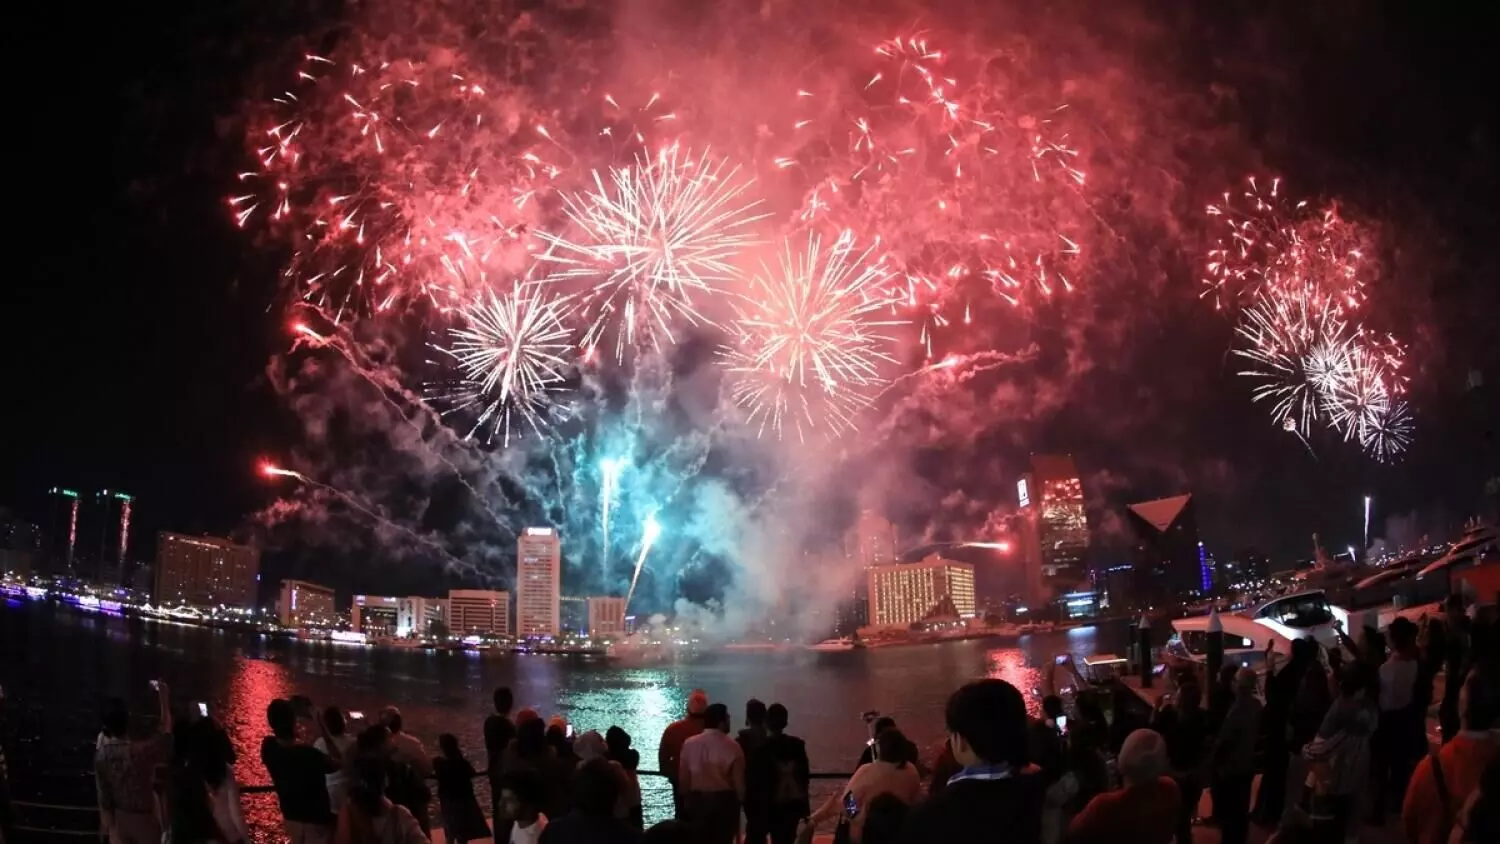 Ramadan In Dubai campaign announces fireworks, light shows